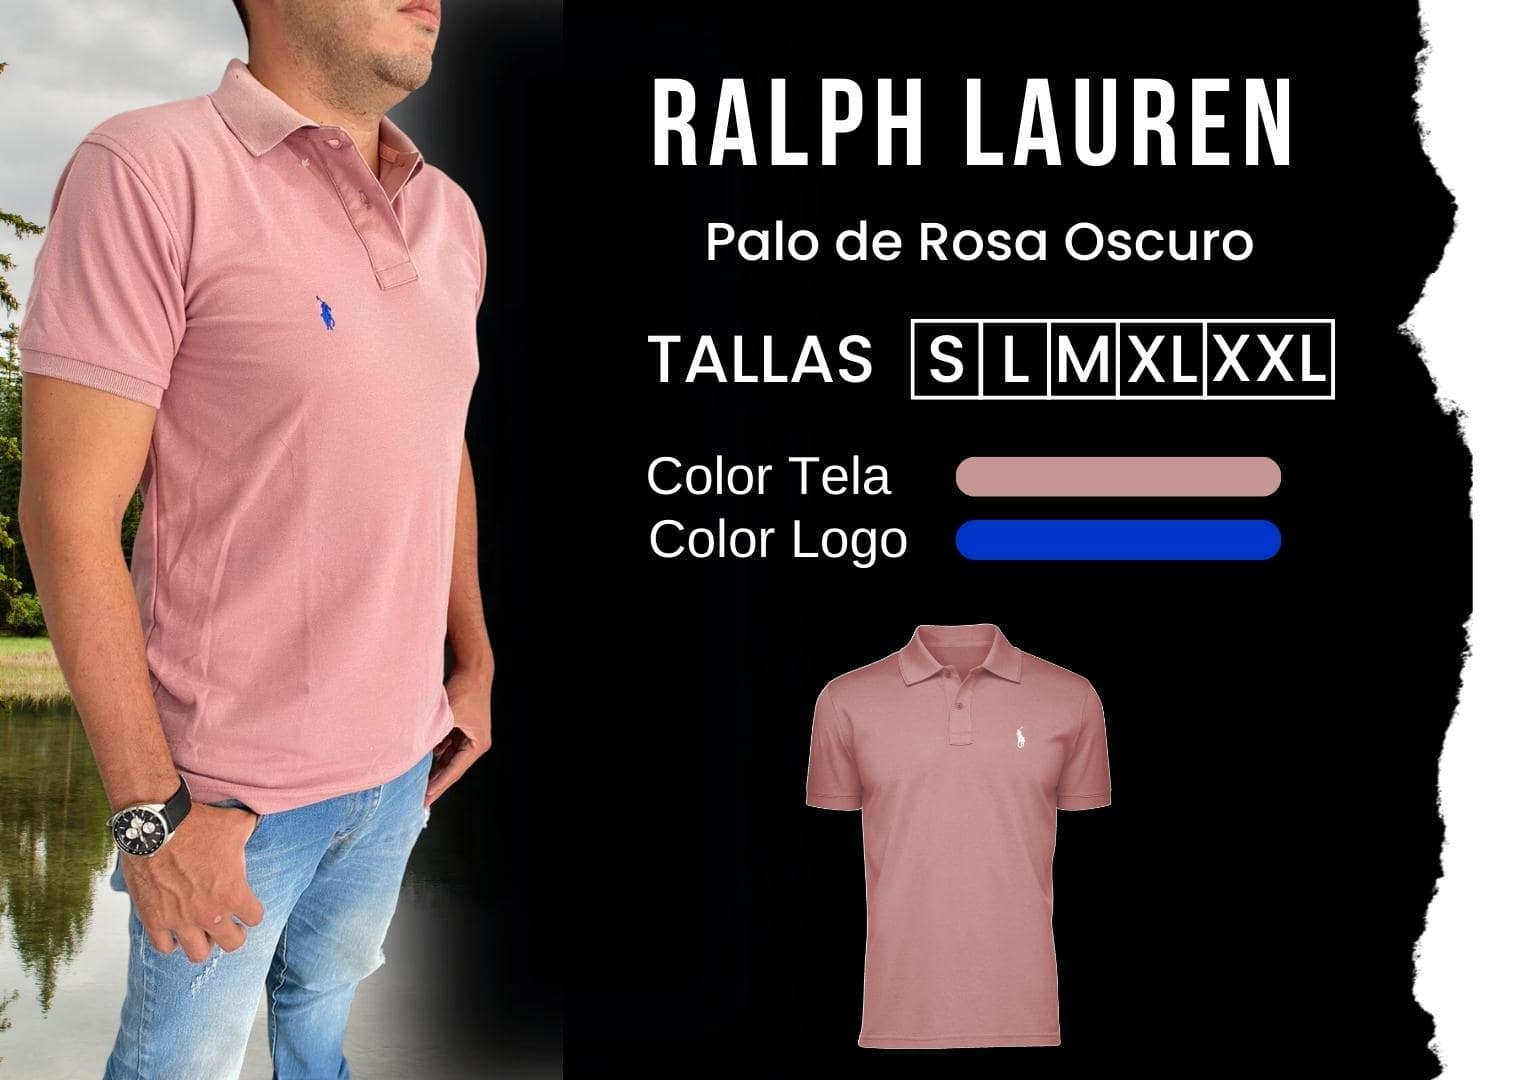 camiseta Ralph Lauren polo hombre tienda olevan colorcamiseta Ralph Lauren polo hombre tienda olevan color palo de rosa oscuro